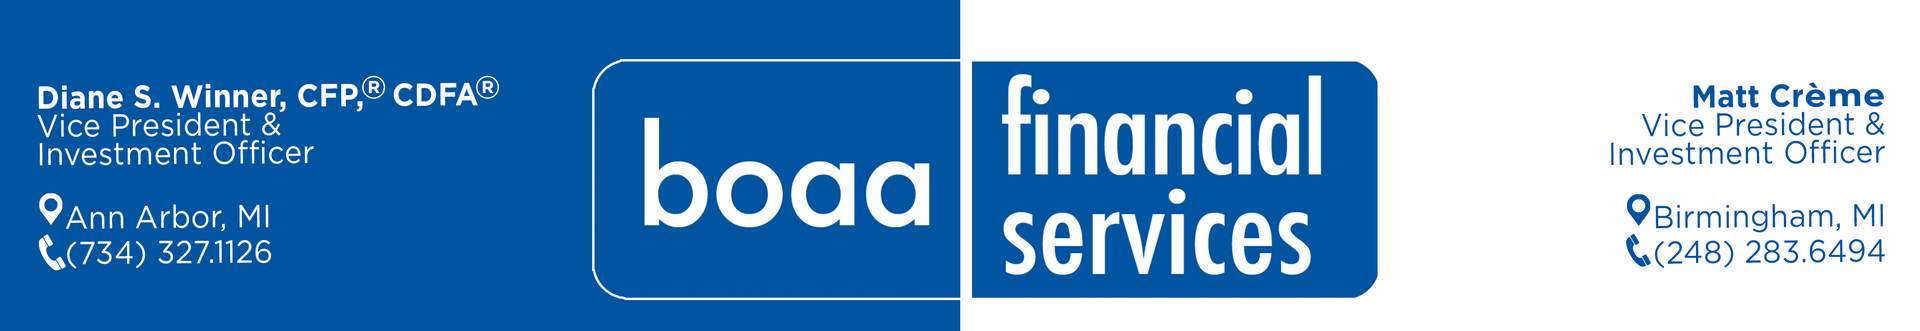 BOAA Financial Services